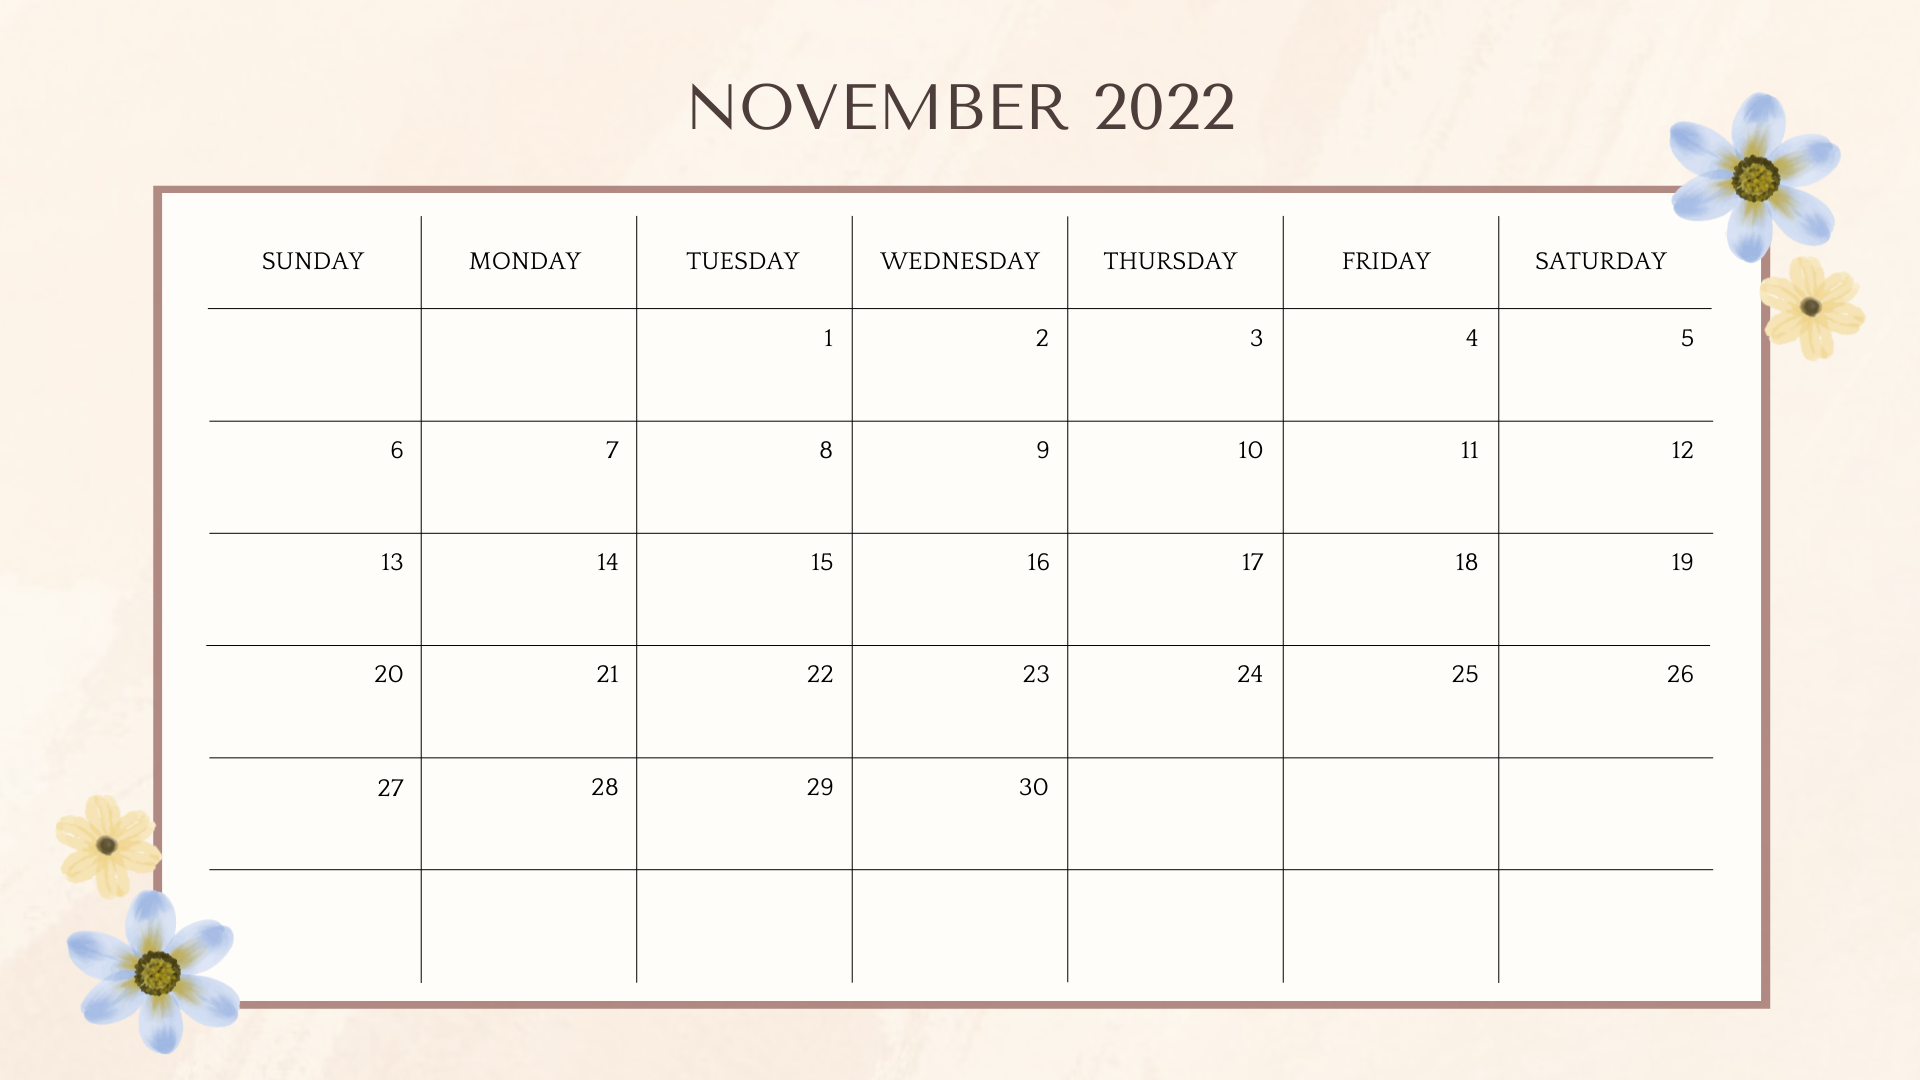 November 2022 Calendar